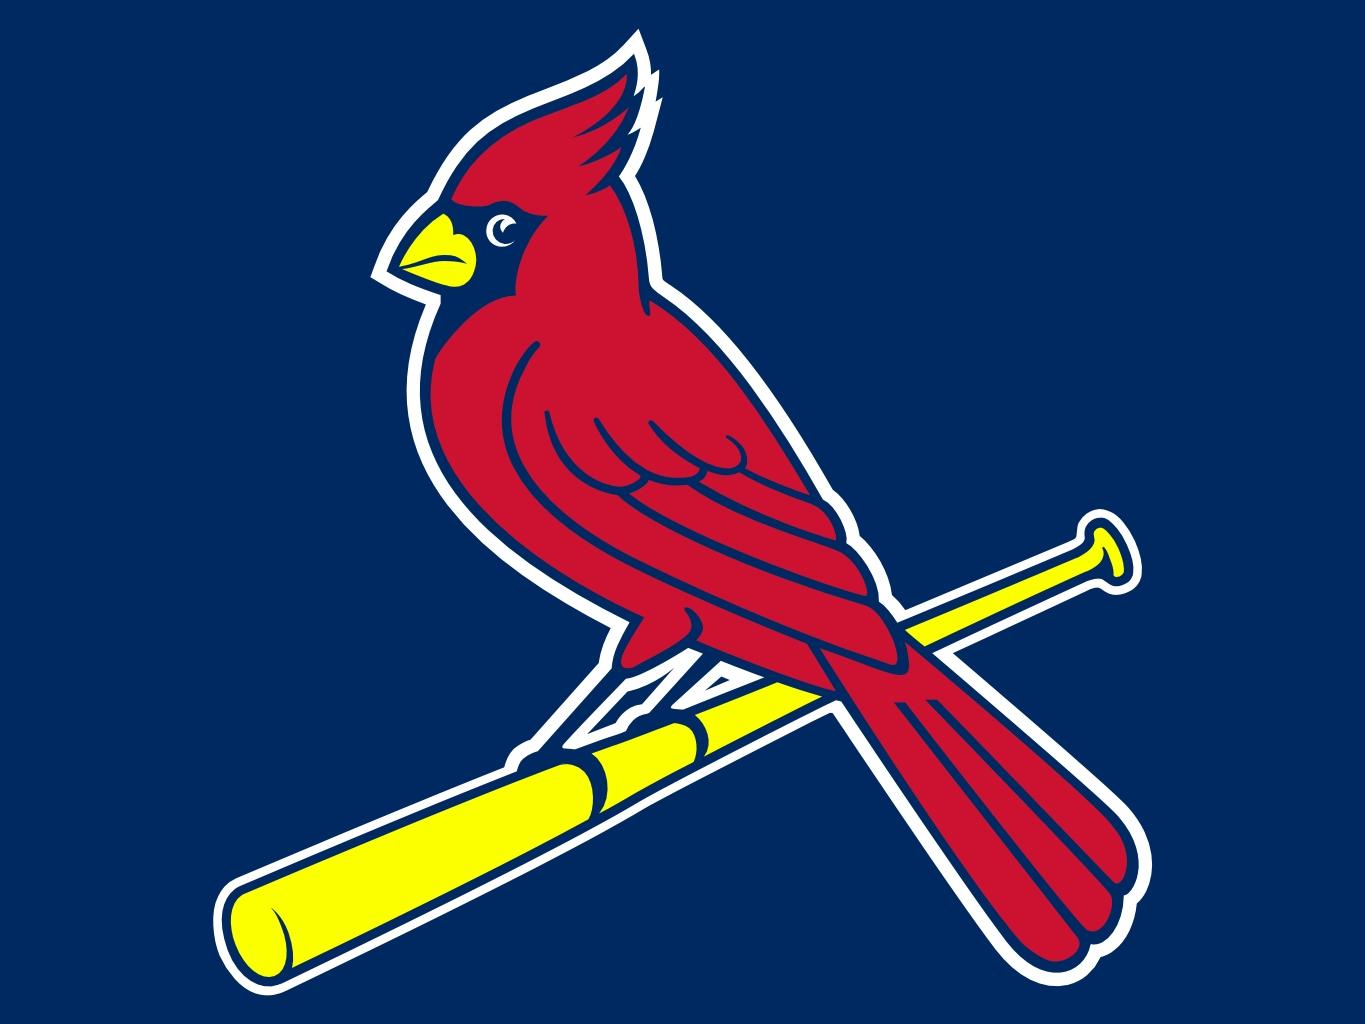 St. Louis Cardinals Wallpaper. St. Louis Cardinals Background